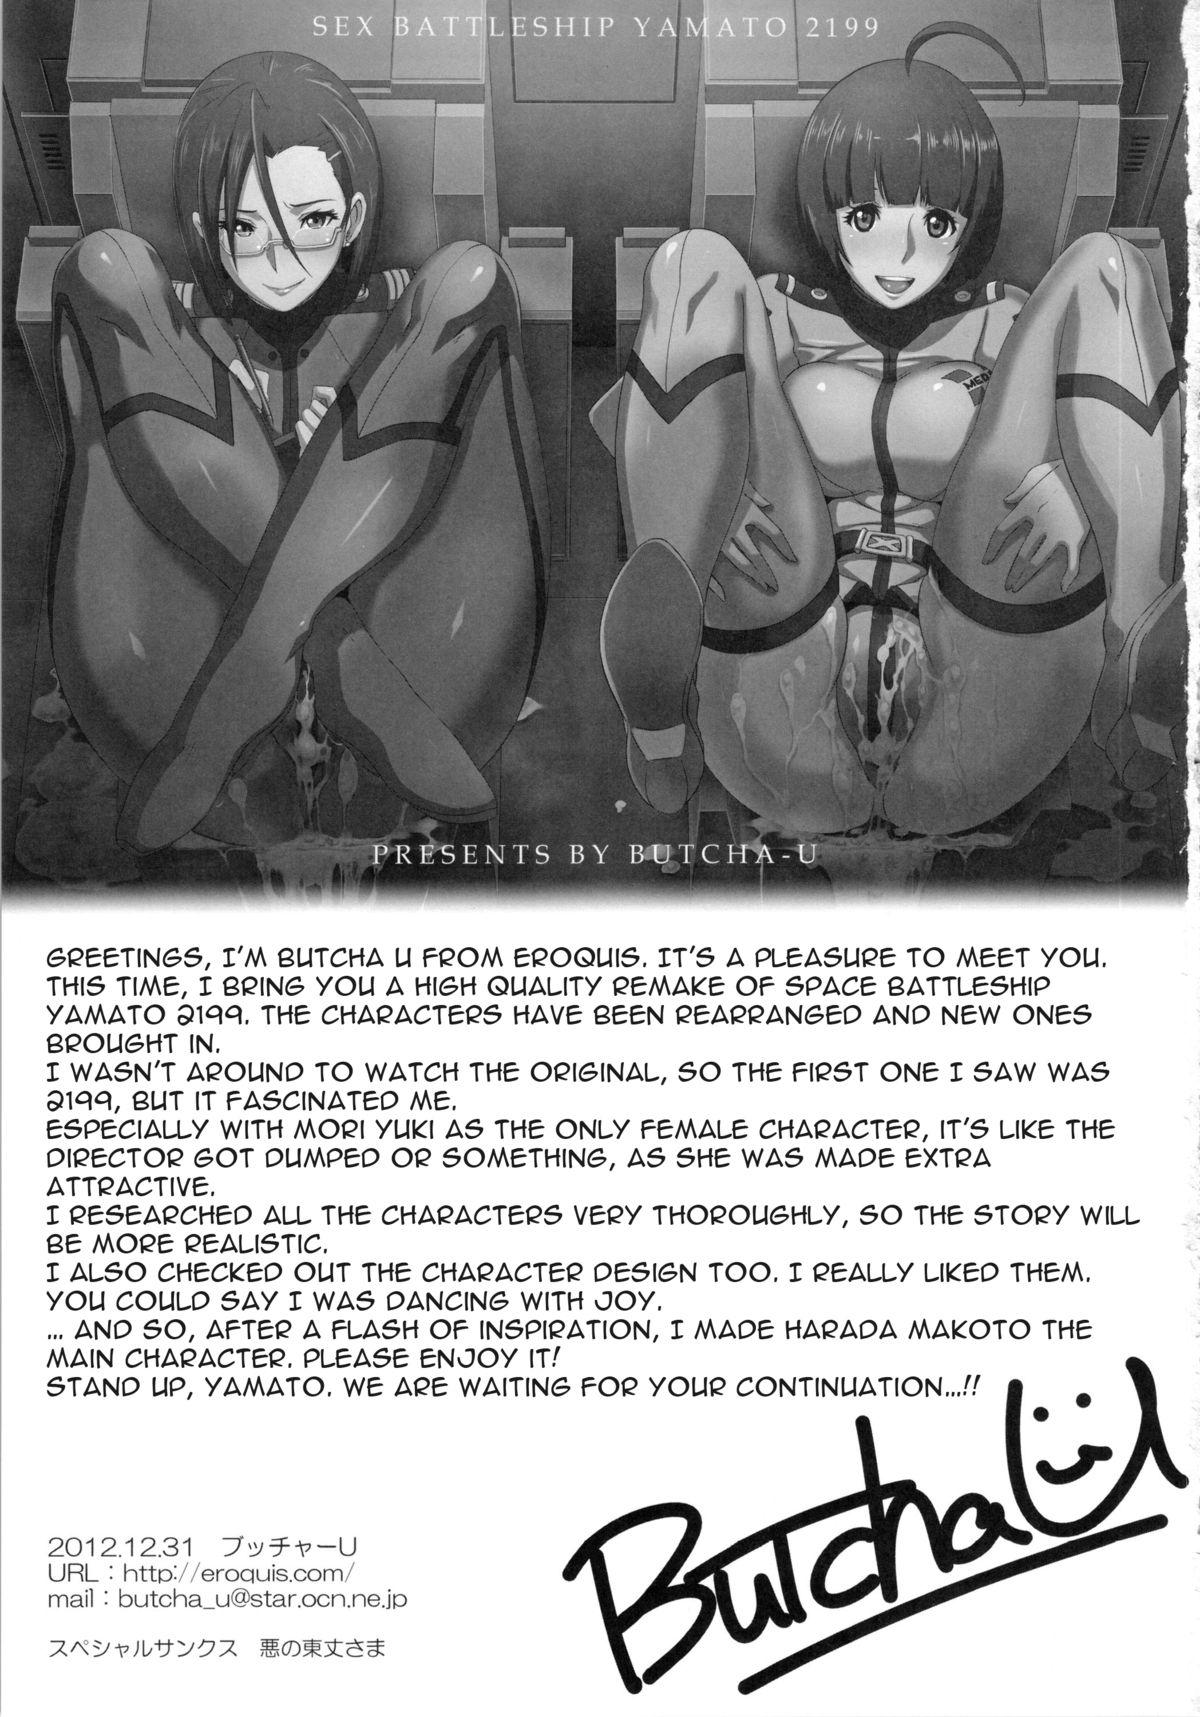 Fleshlight Ian Senkan Yamato 2199 | Comfort Battleship Yamato 2199 - Space battleship yamato Negro - Page 2